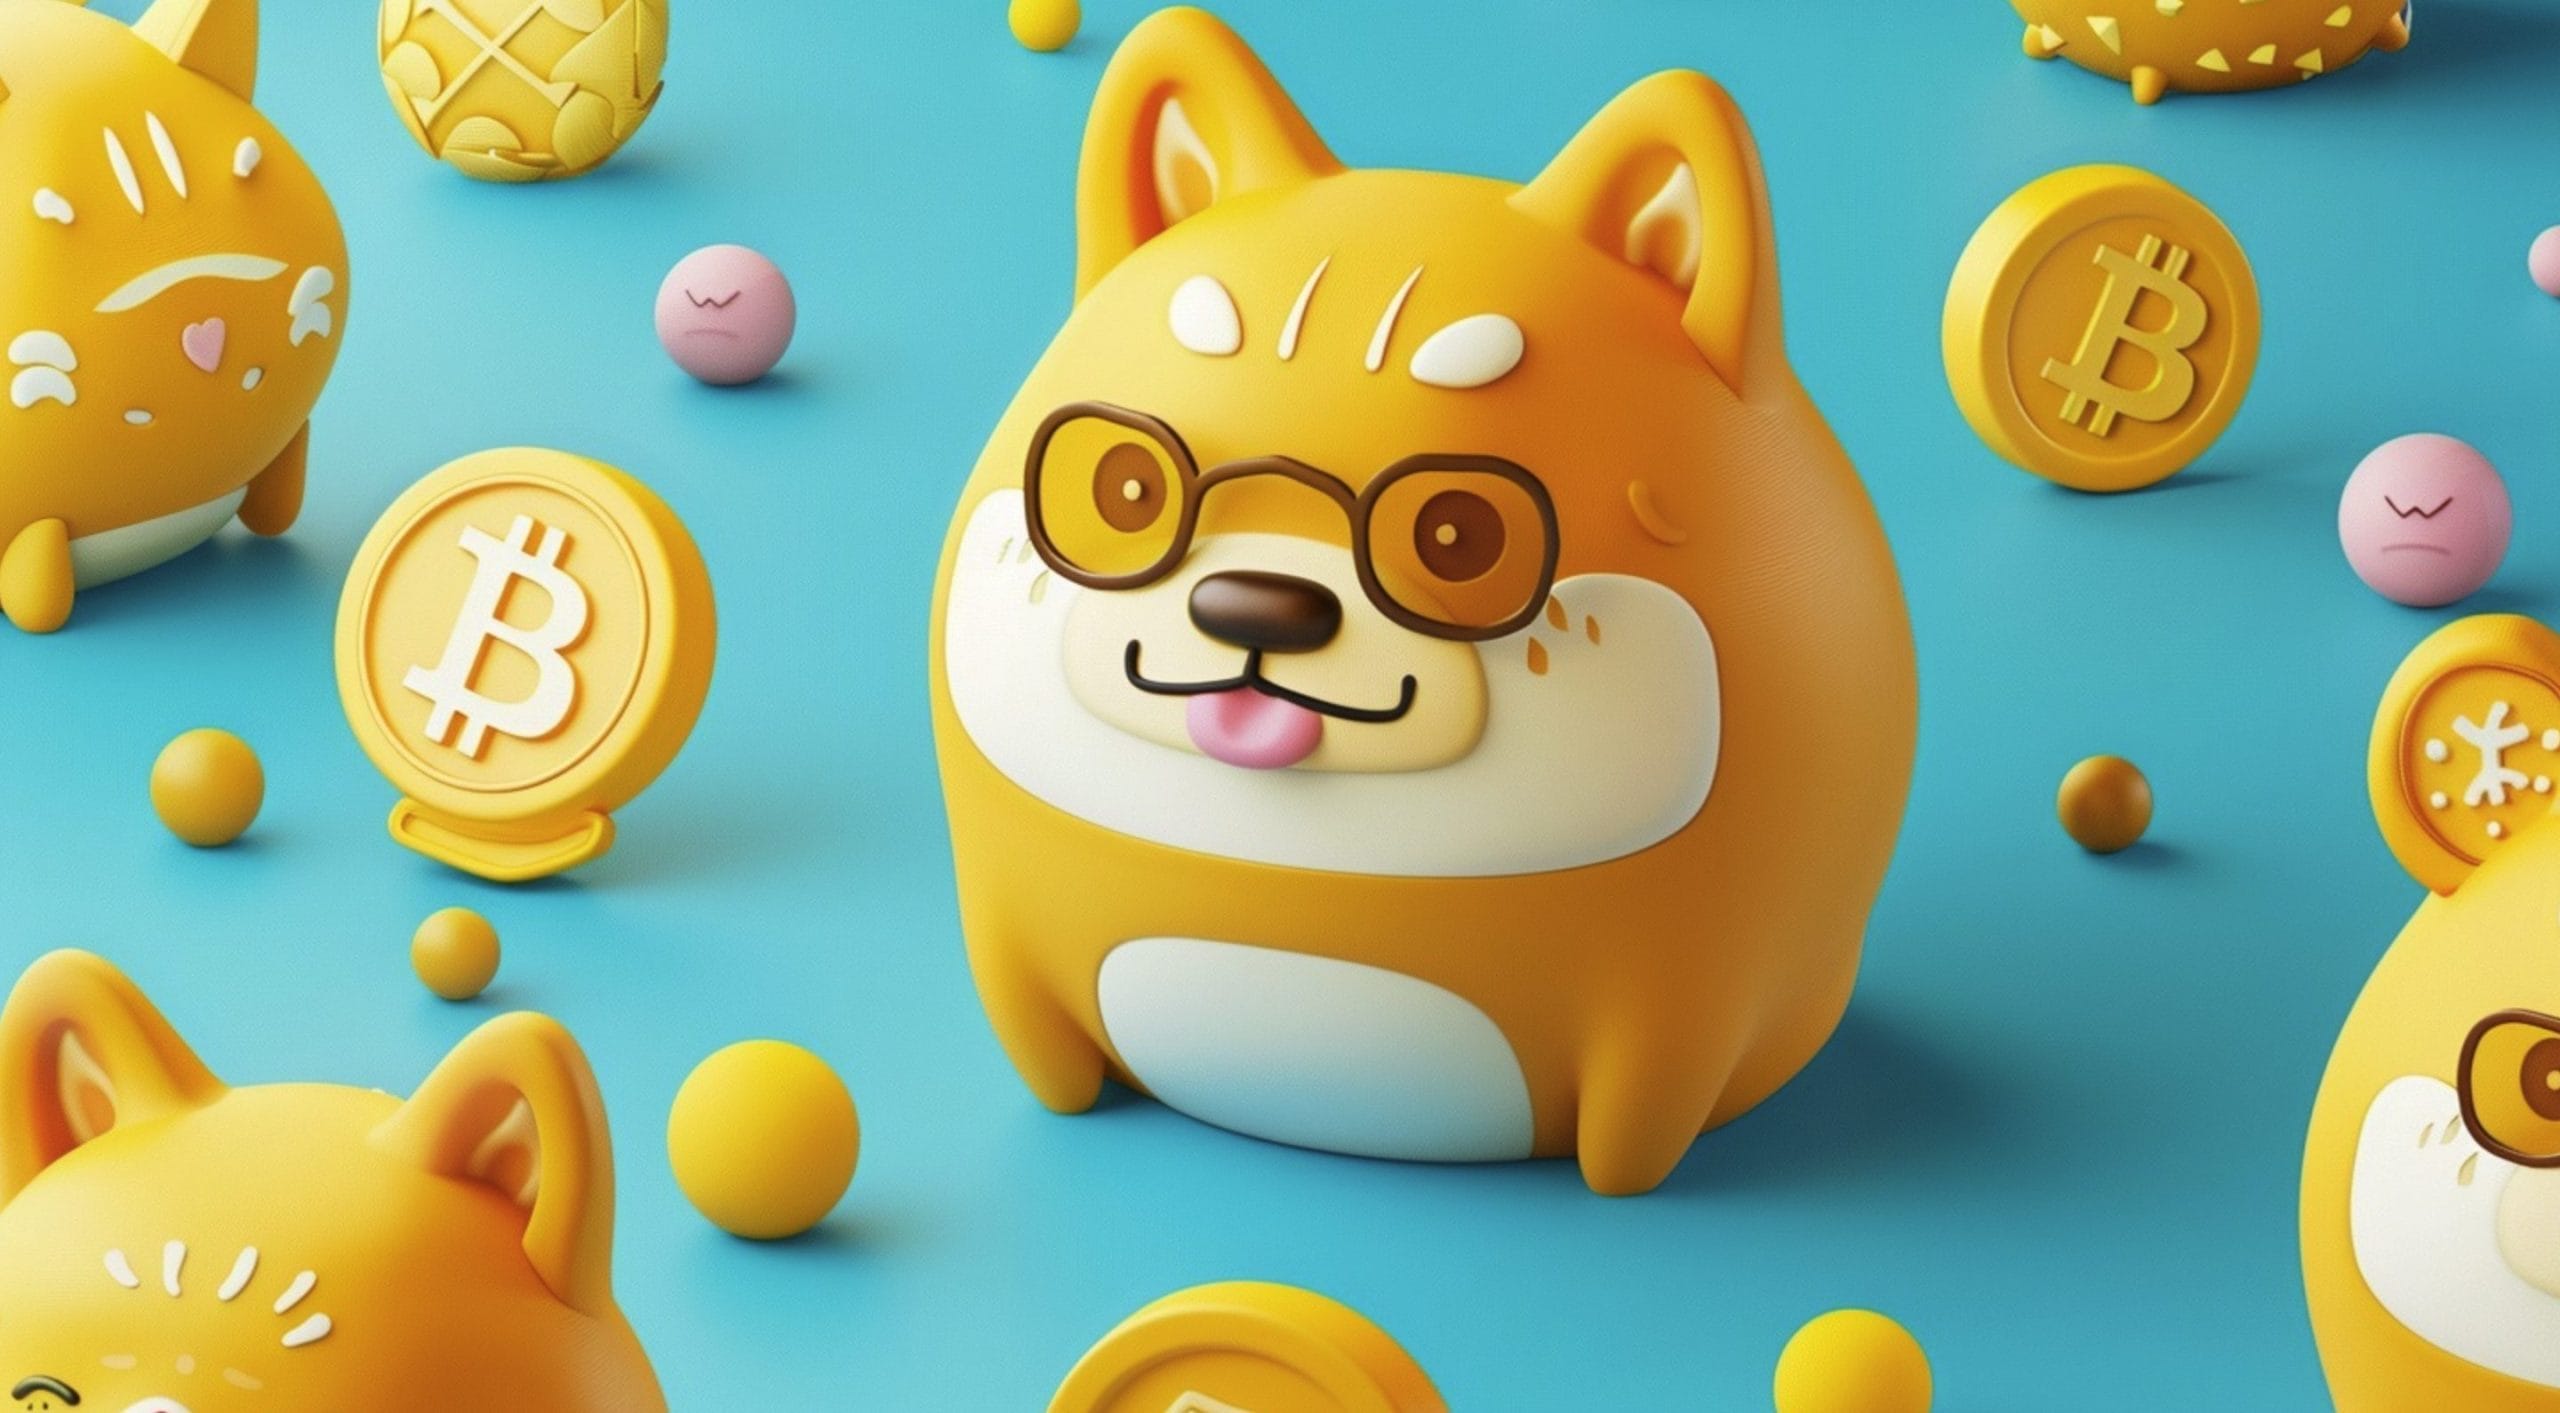 RIP Bears: Meme Coins Surge as PlayDoge Presale Hits $5.7M